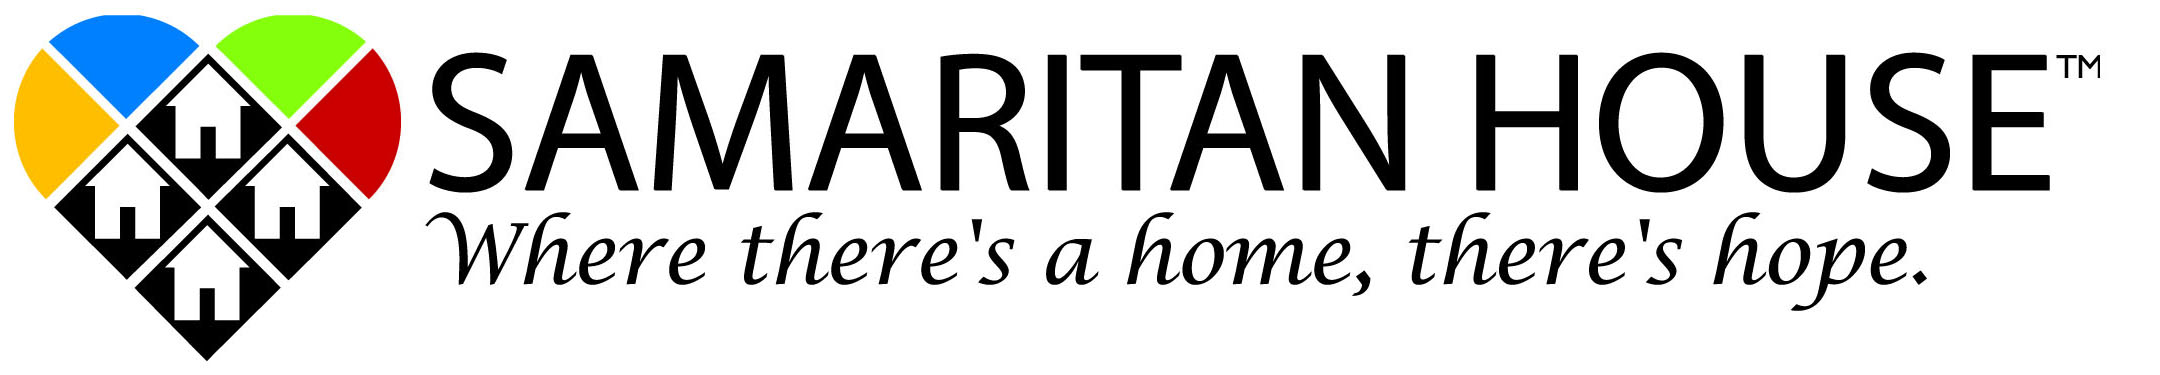 Samaritan House Where there's a home, there's hope. Logo